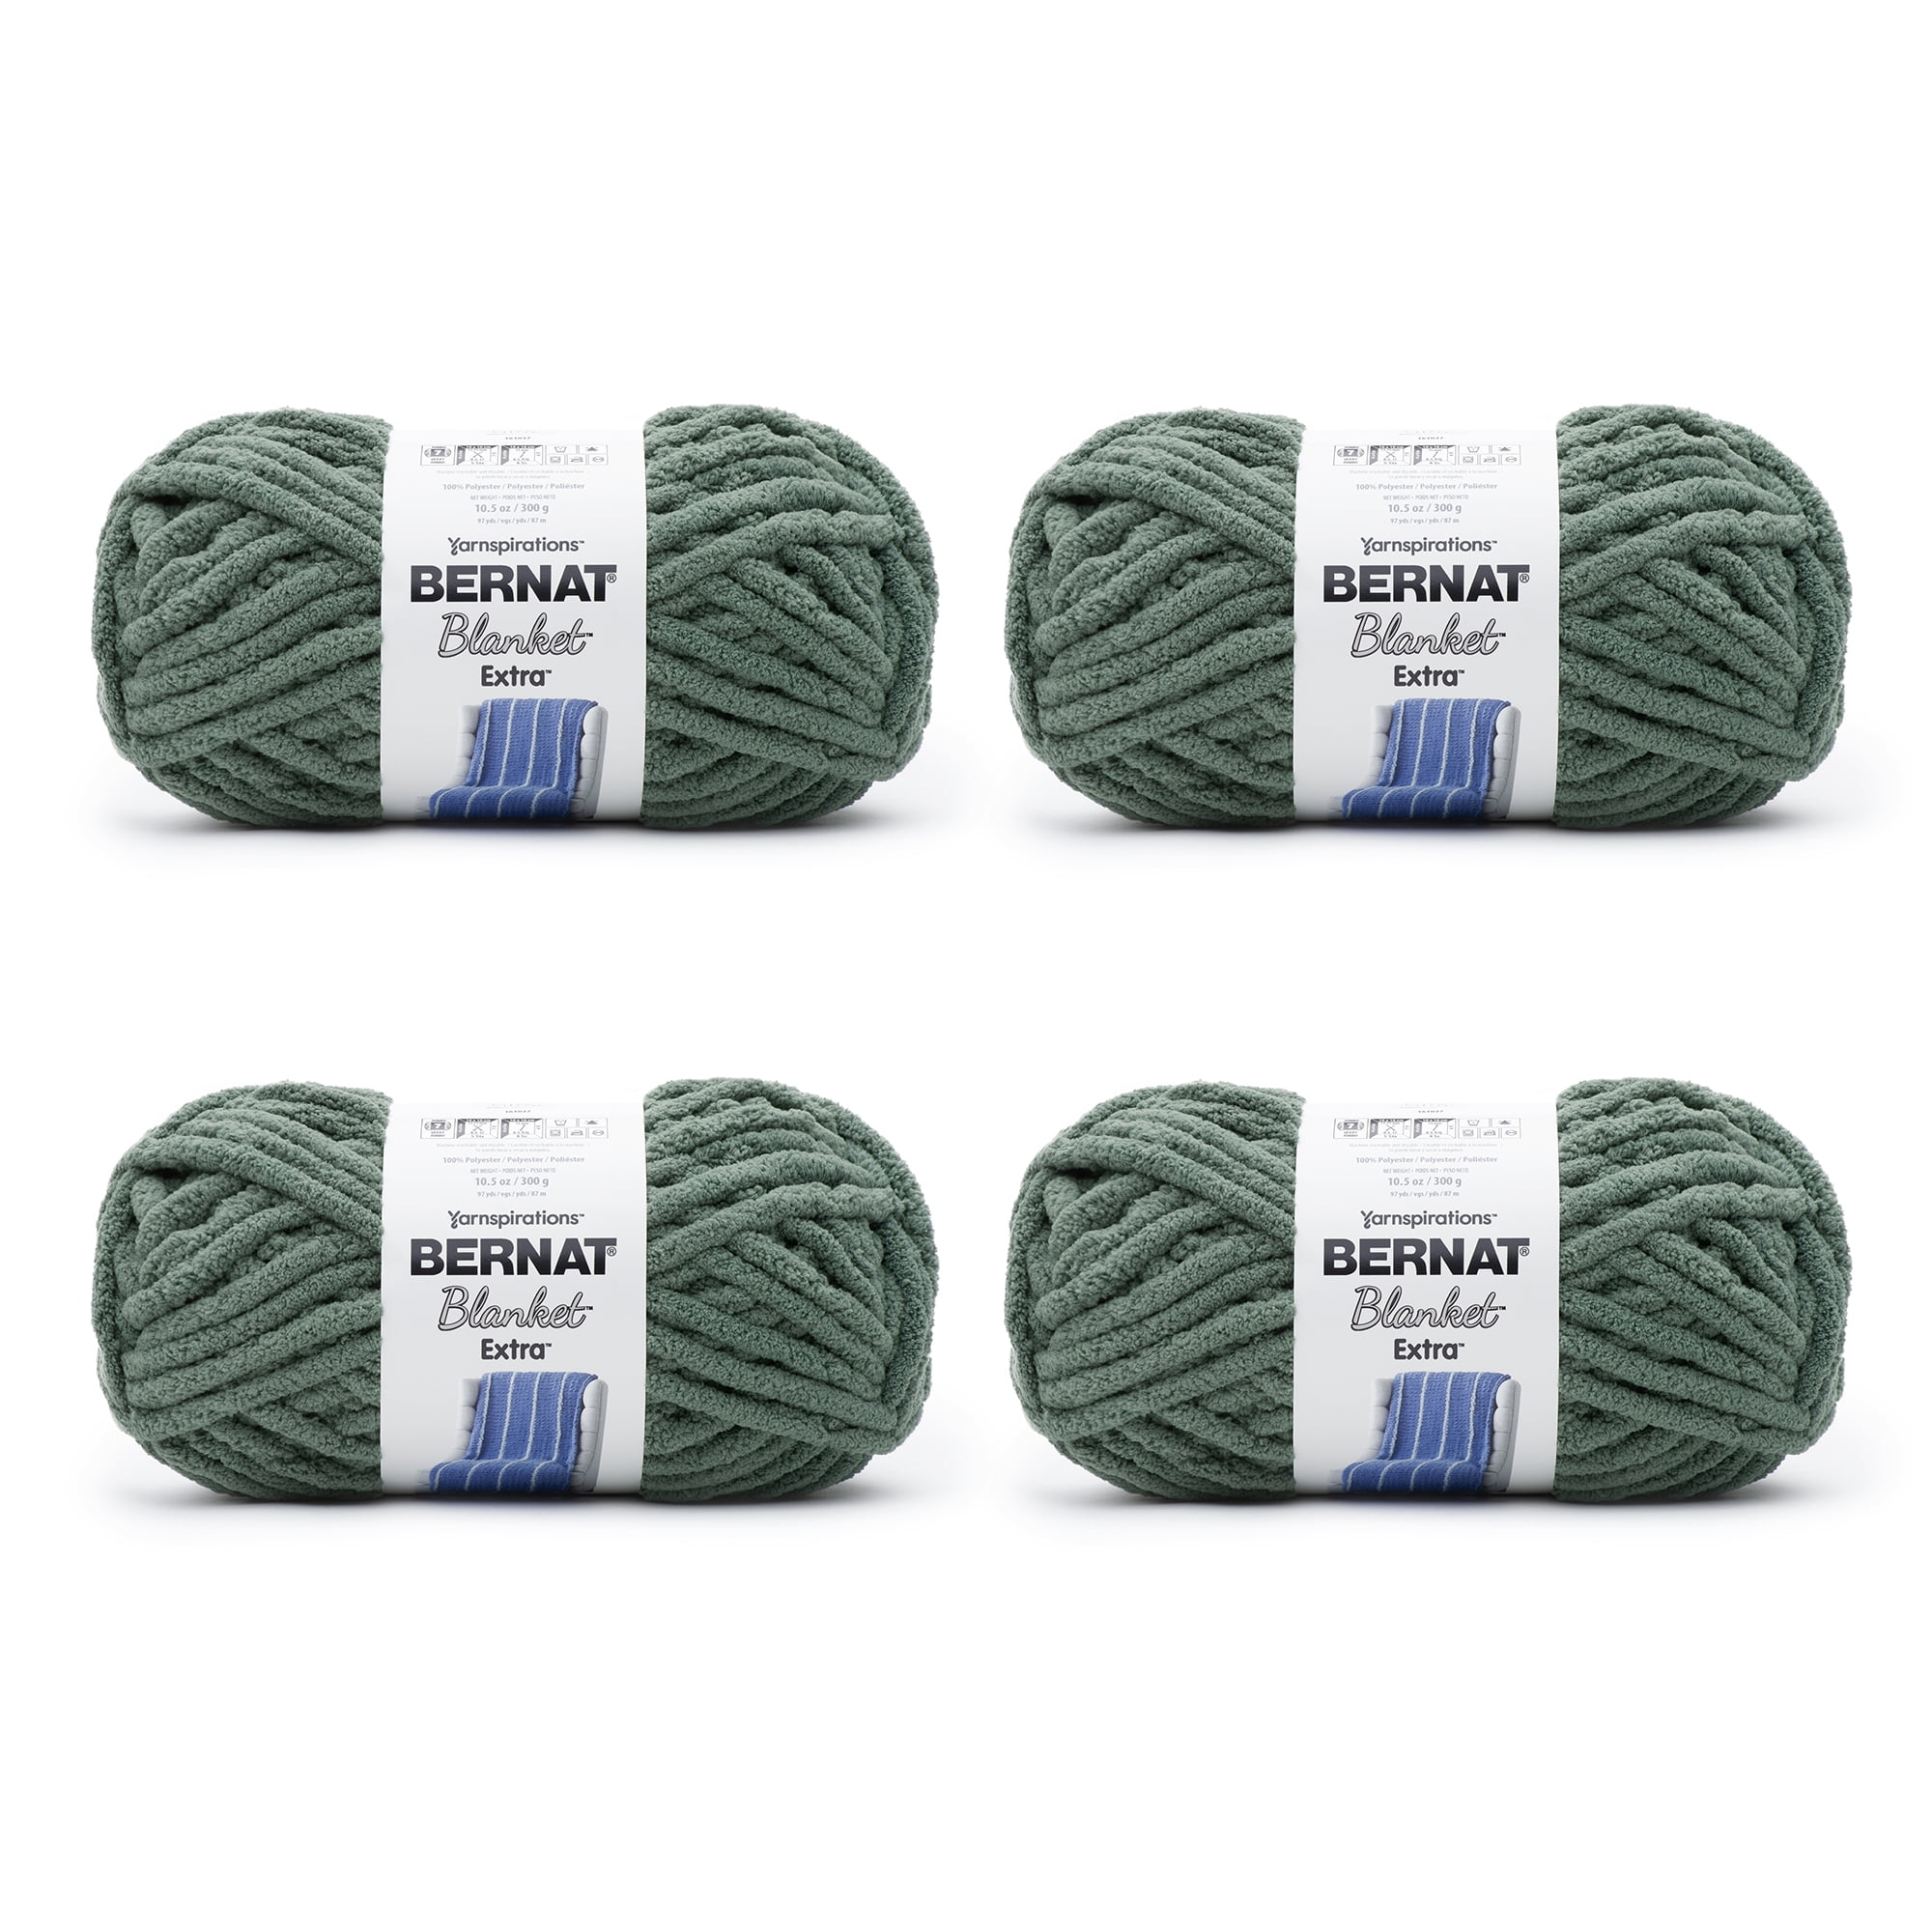 Bernat Blanket Extra Softened Blue Yarn - 2 Pack of 300g/10.5oz - Polyester - 7 Jumbo - 97 Yards - Knitting, Crocheting, Crafts & Amigurumi, Chunky